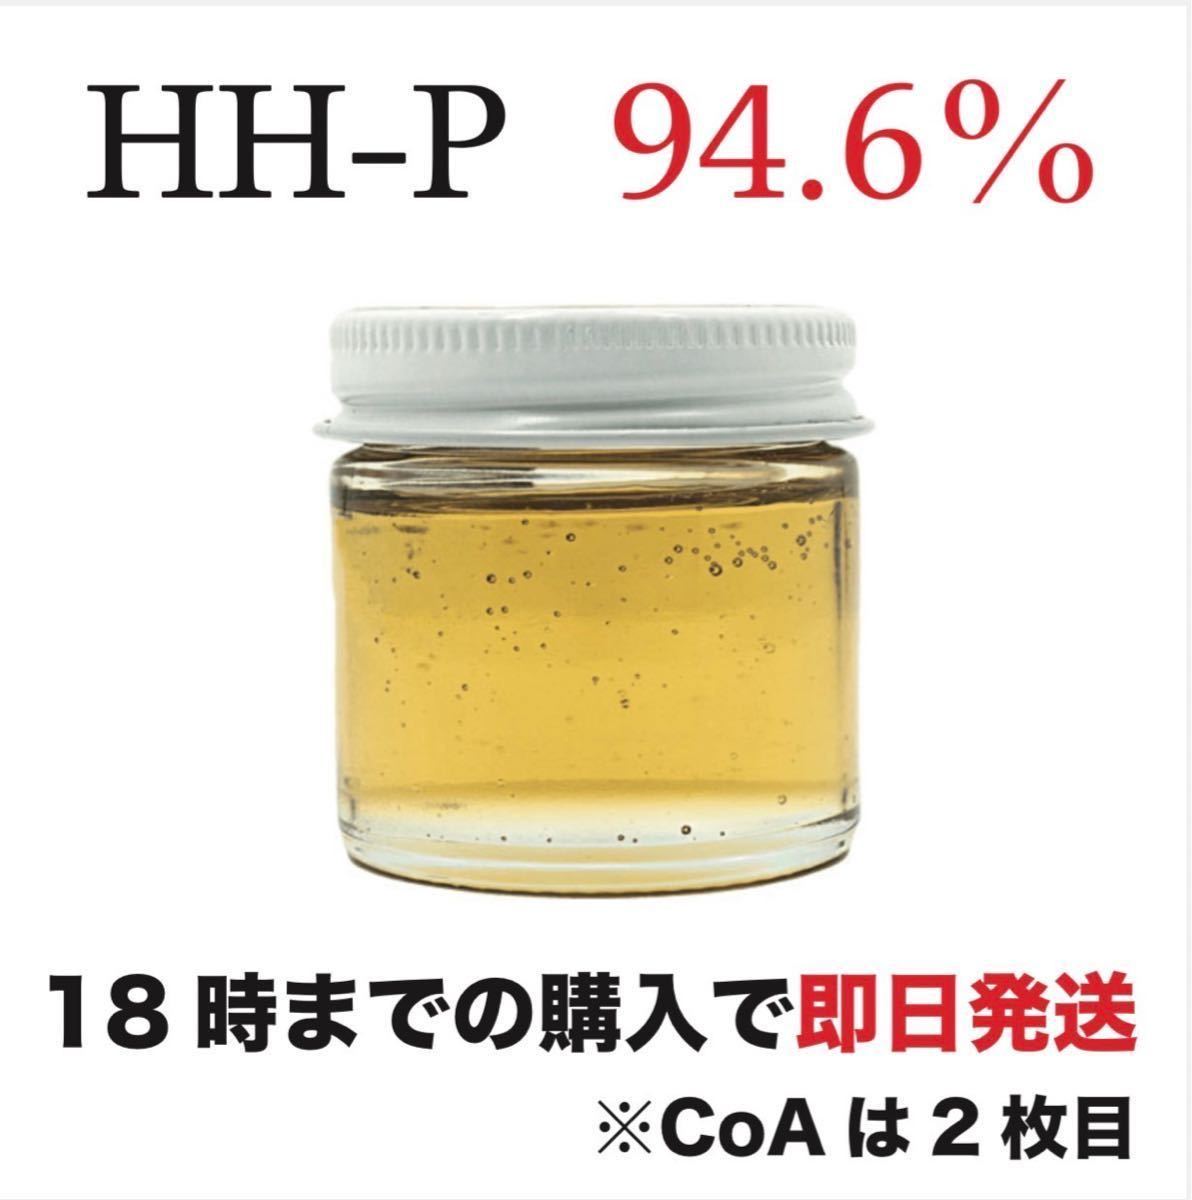 HH-P 94.6% 原料　【1g】　匿名配送可能　即日発送　#HHCH #THCHO #CBD #CBN #CBG